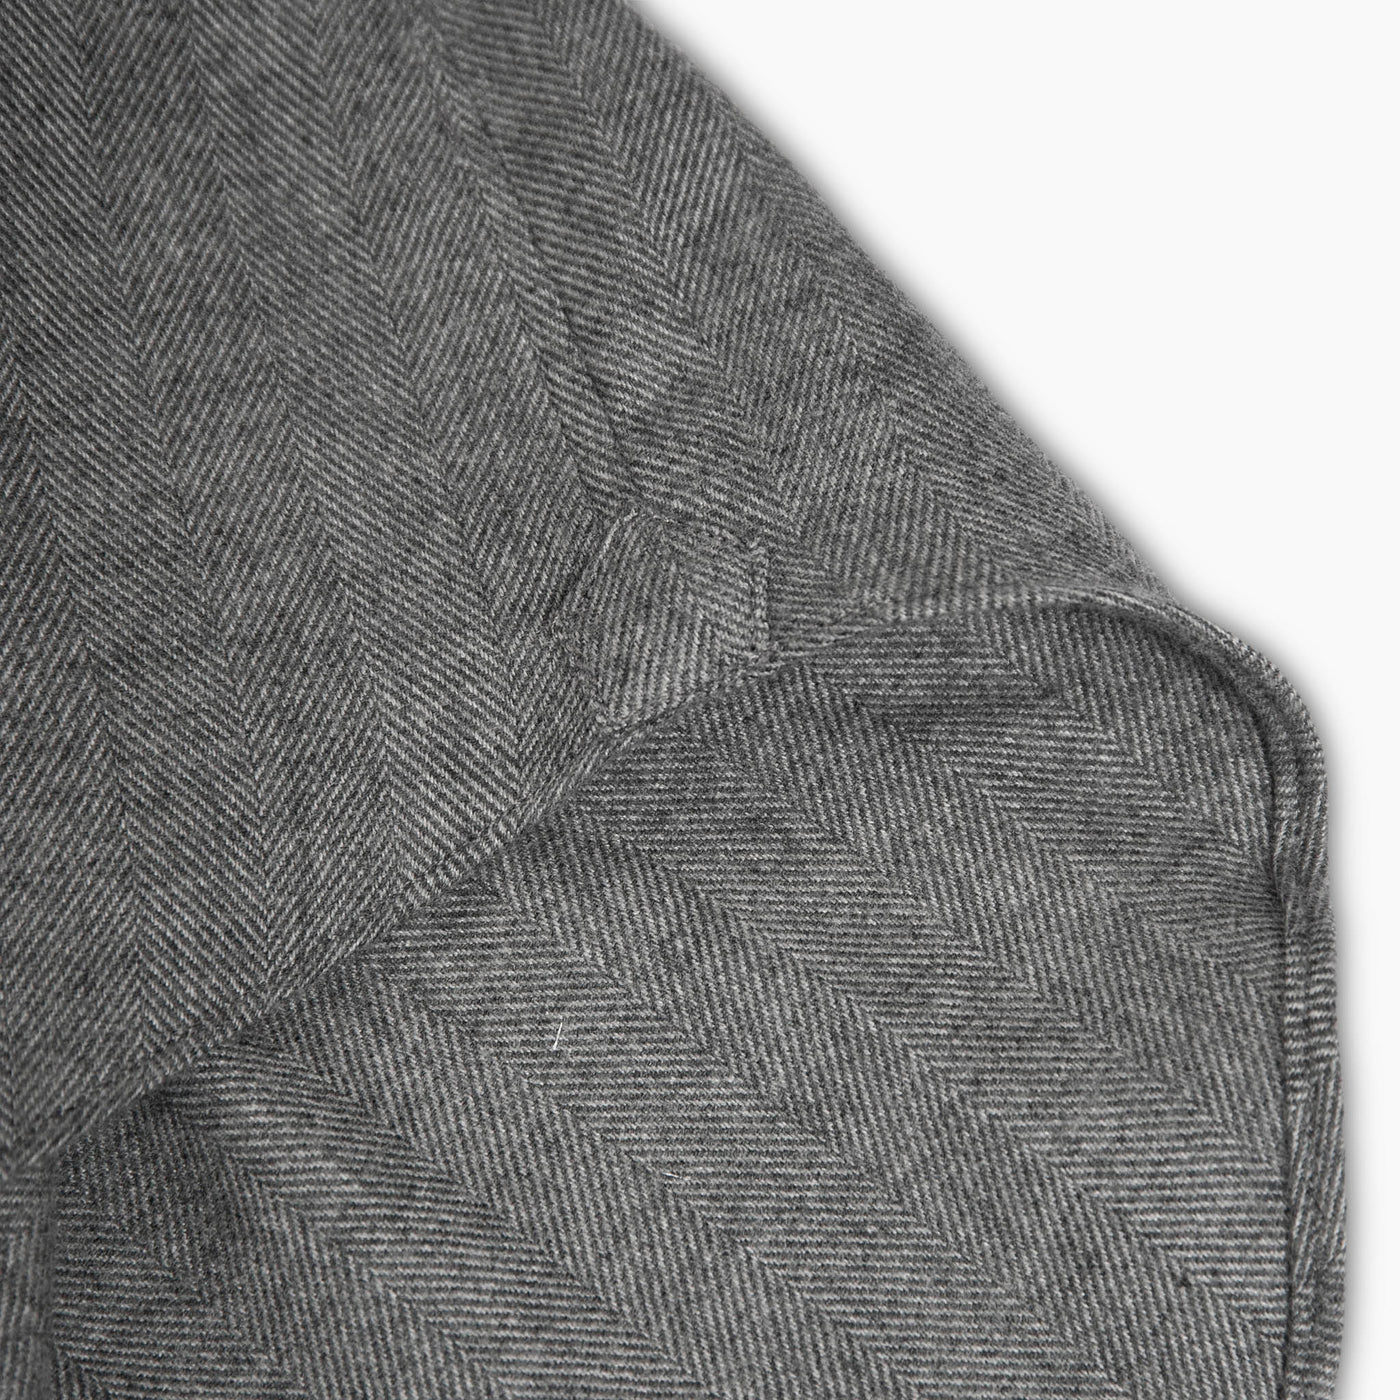 Conrad Soft cotton Melton Herringbone (dark grey melange)